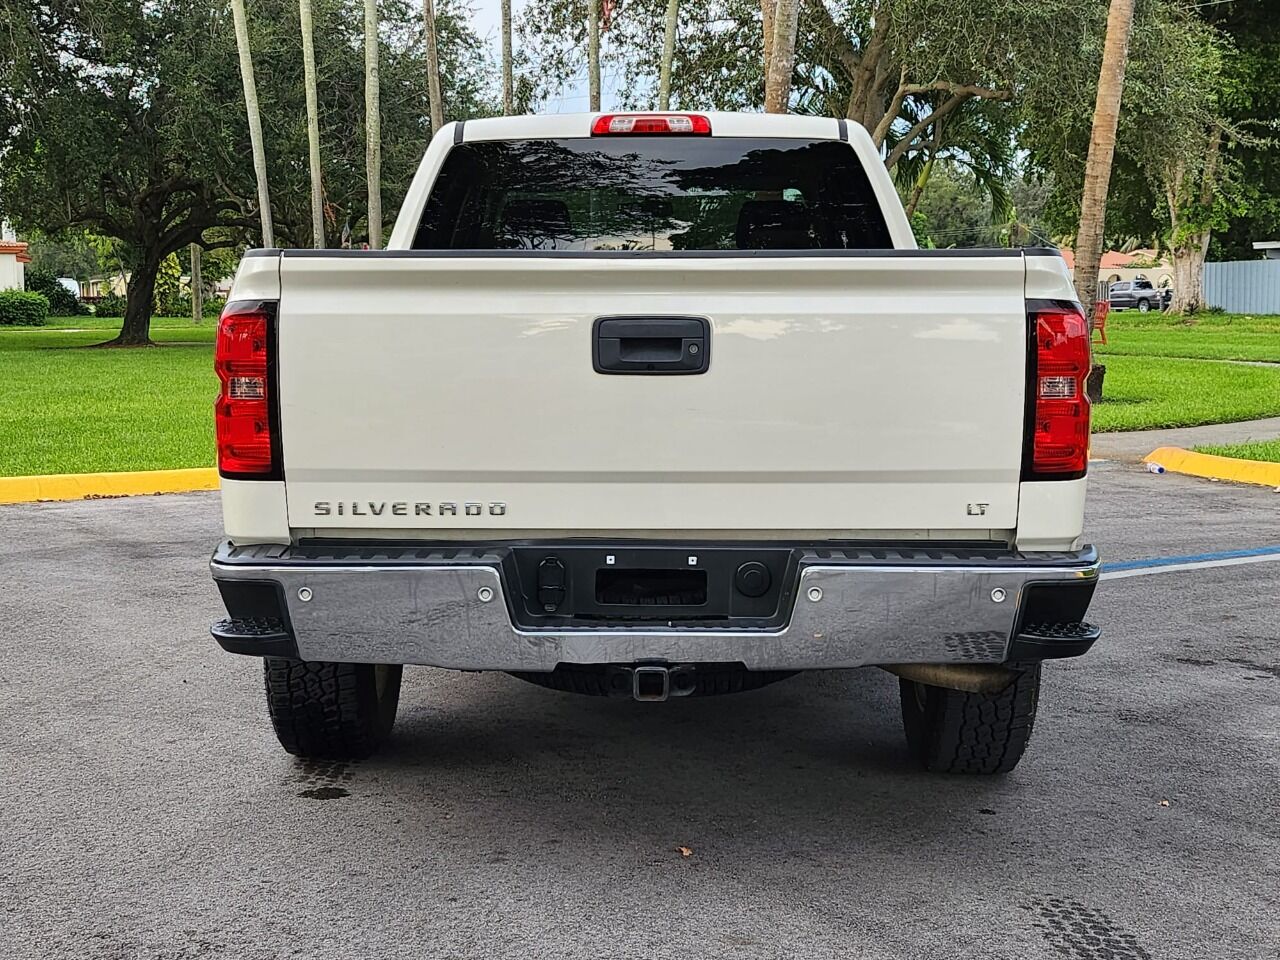 2014 CHEVROLET Silverado Pickup - $20,995